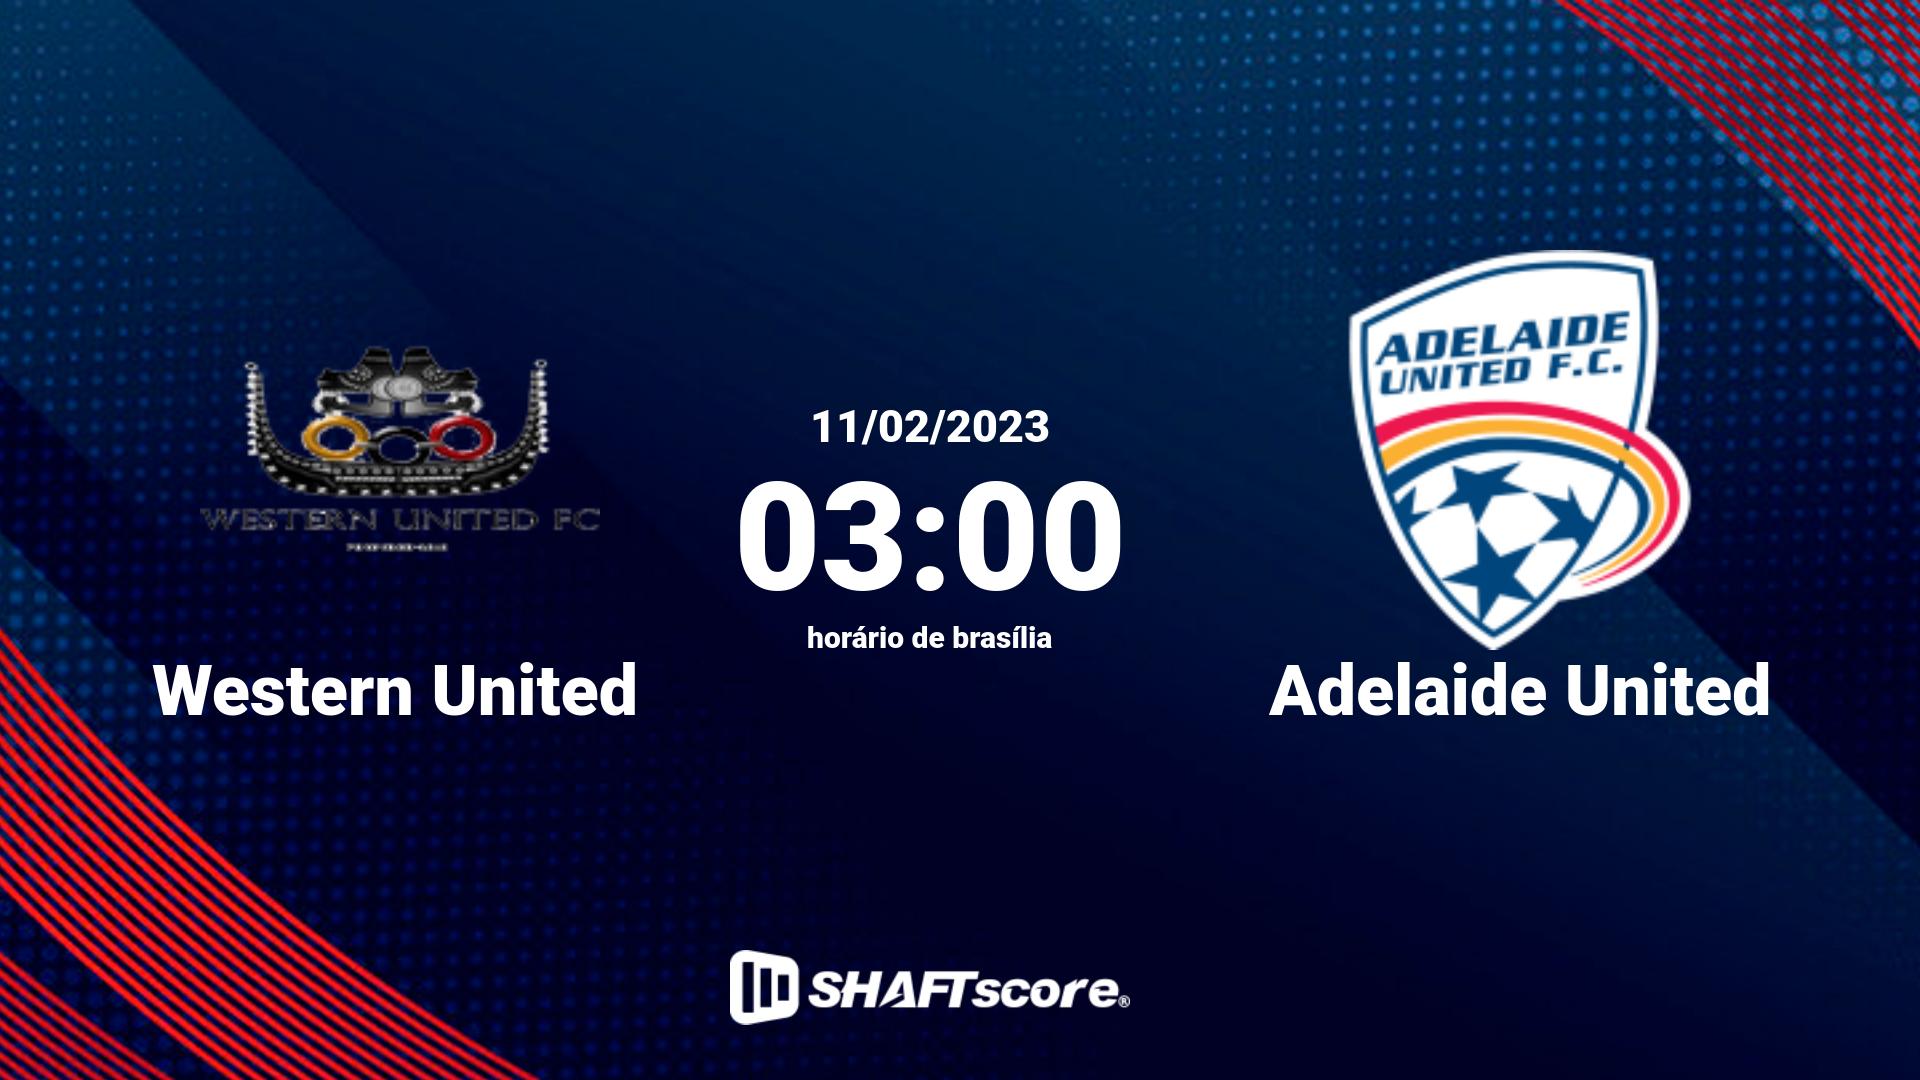 Estatísticas do jogo Western United vs Adelaide United 11.02 03:00